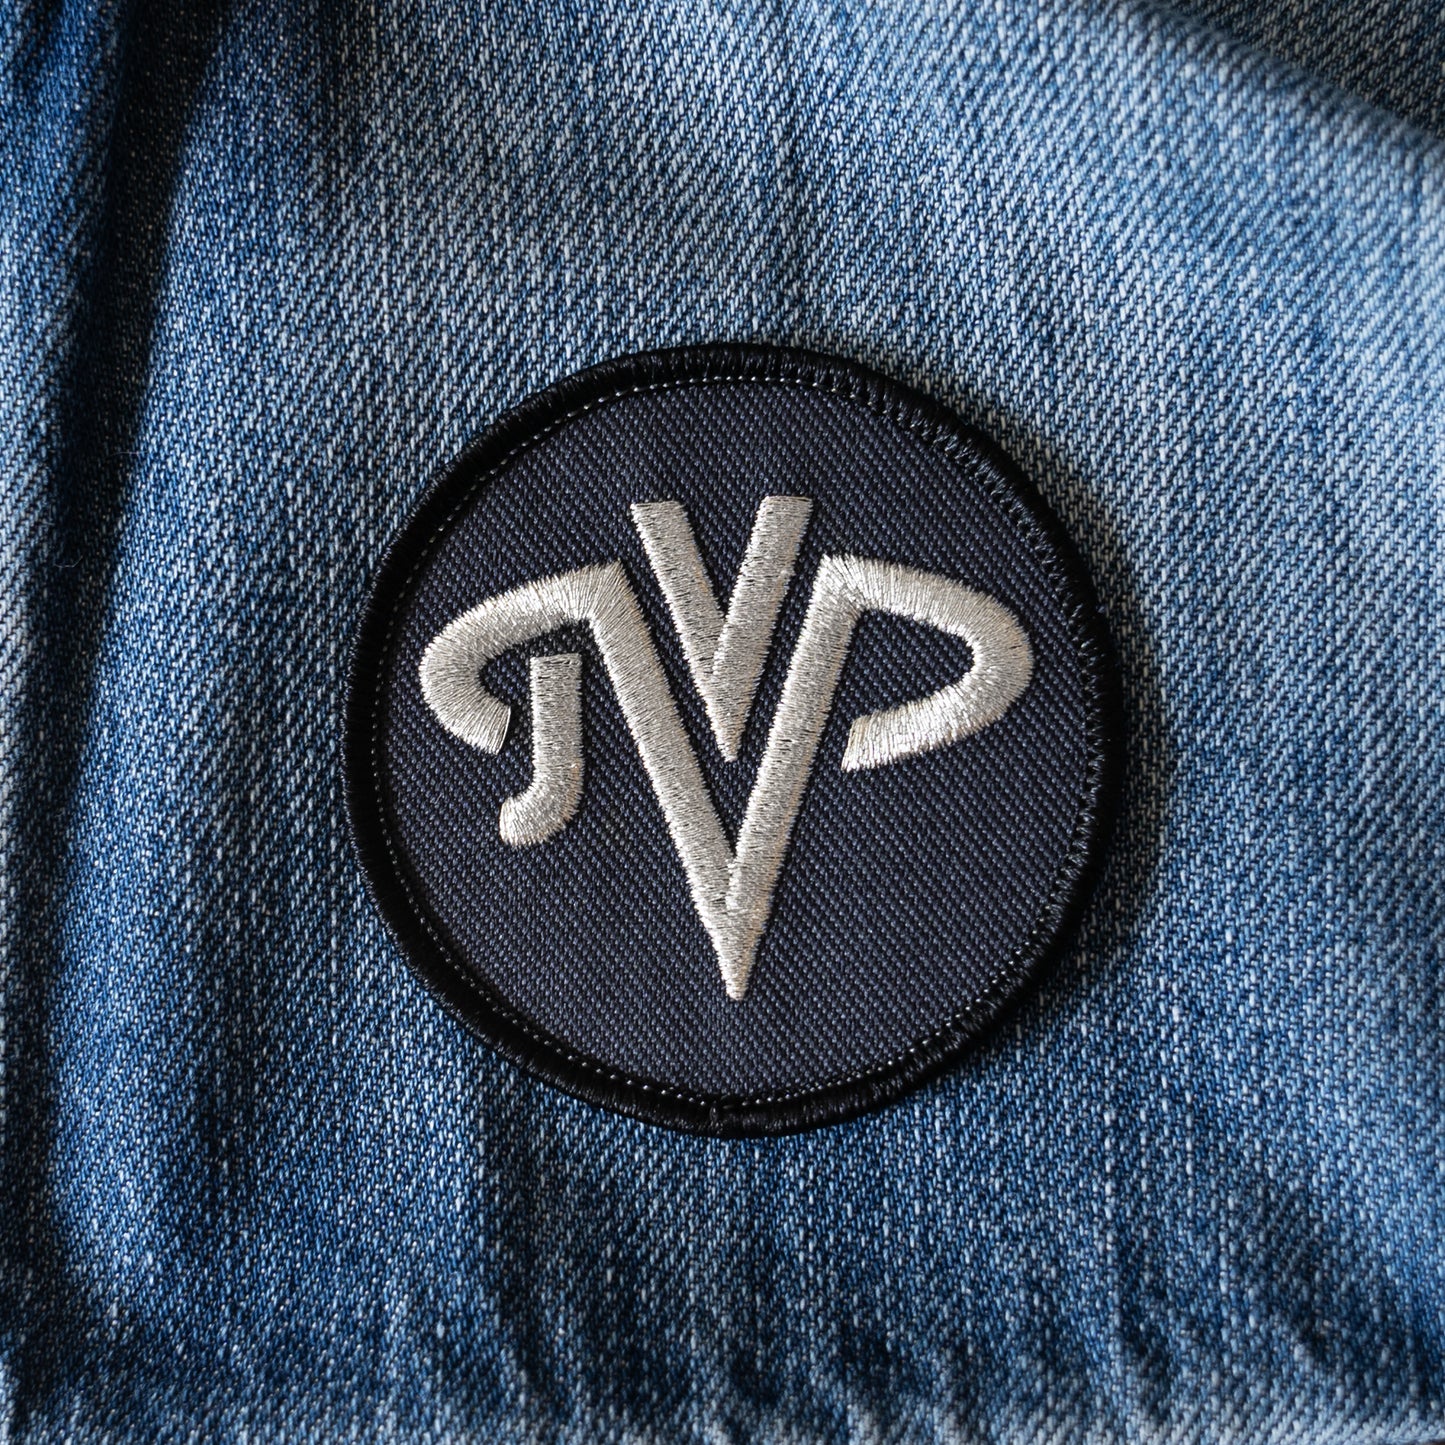 TVP Patch